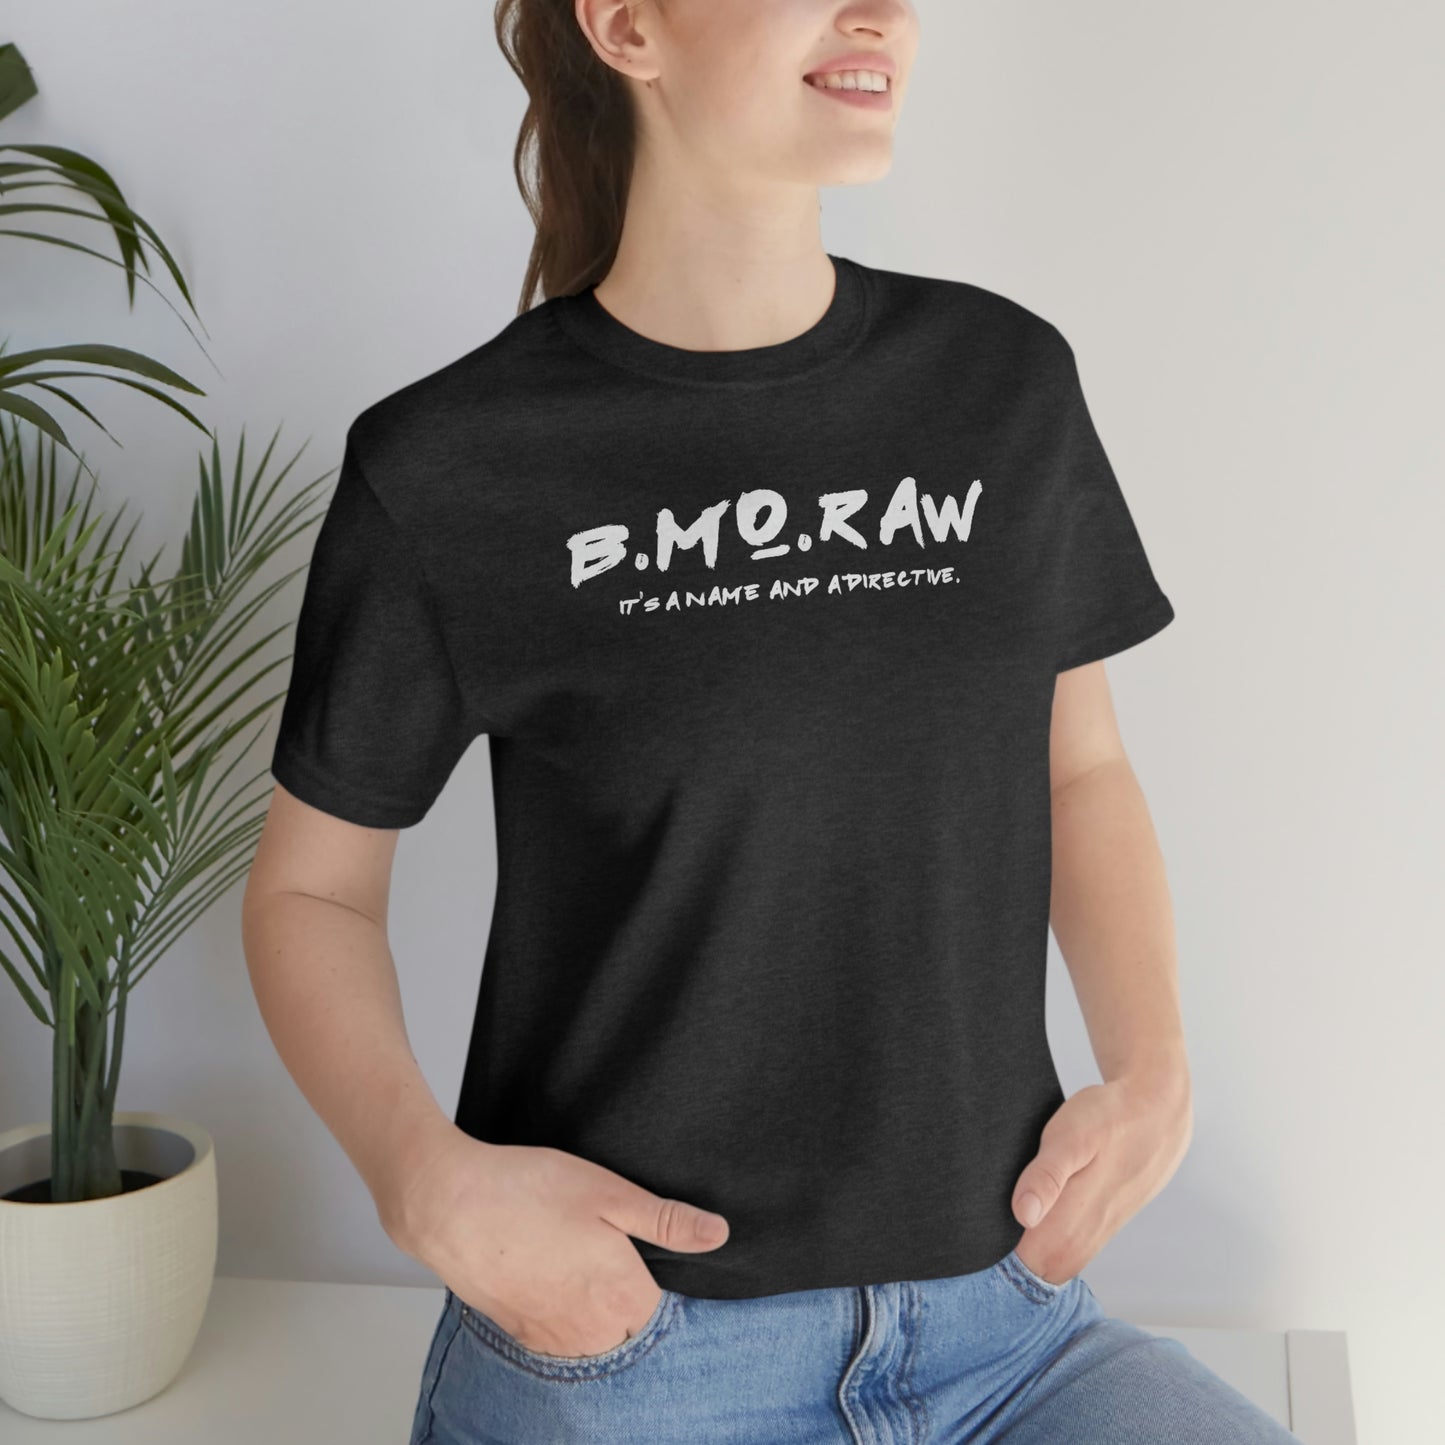 BMoRaw, A Raw-ism - Tee